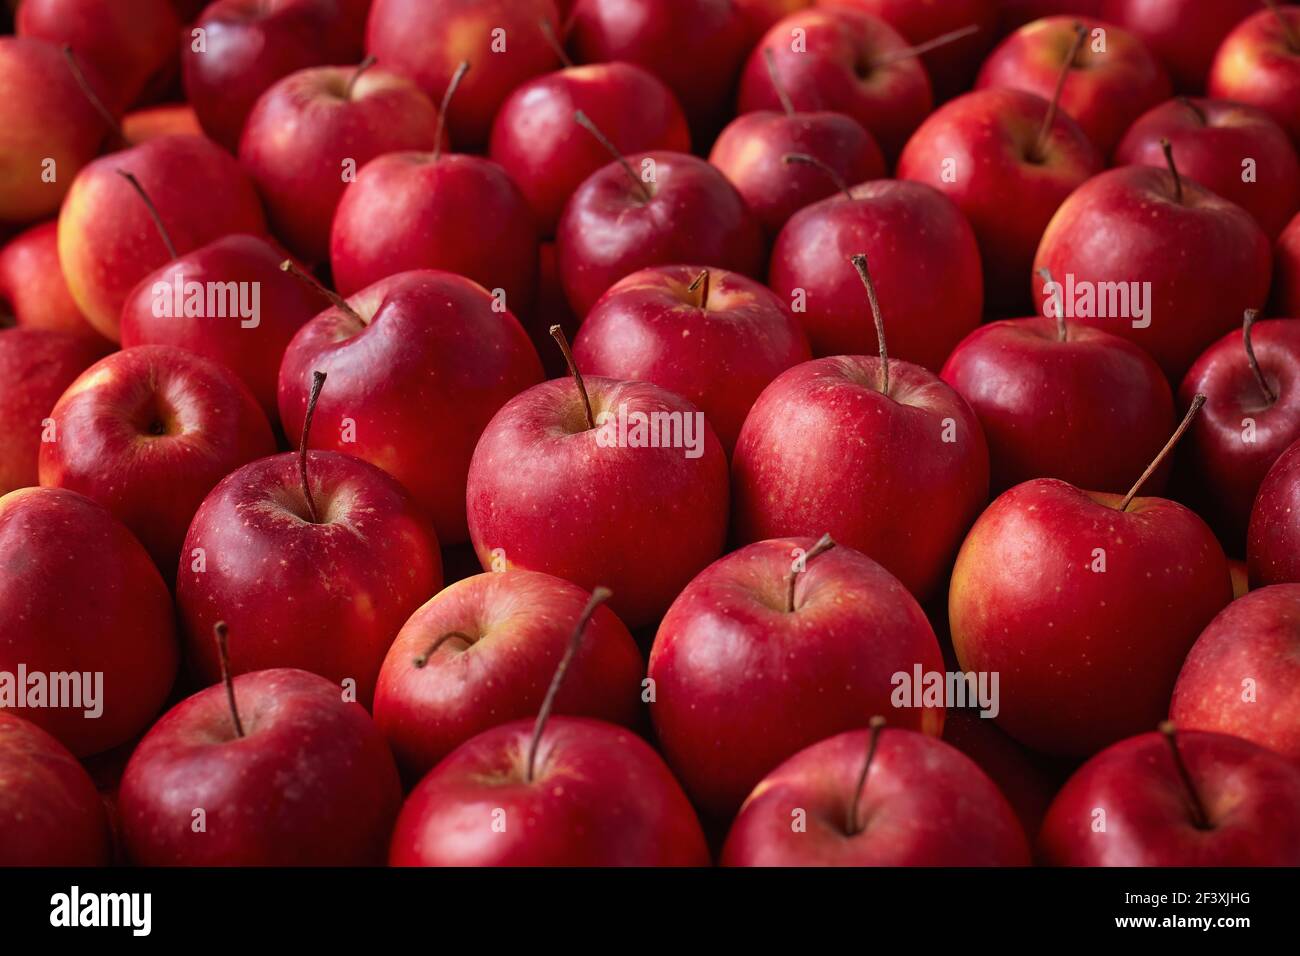 Full frame shot of red apples. Fresh red apples from the market. Stock Photo